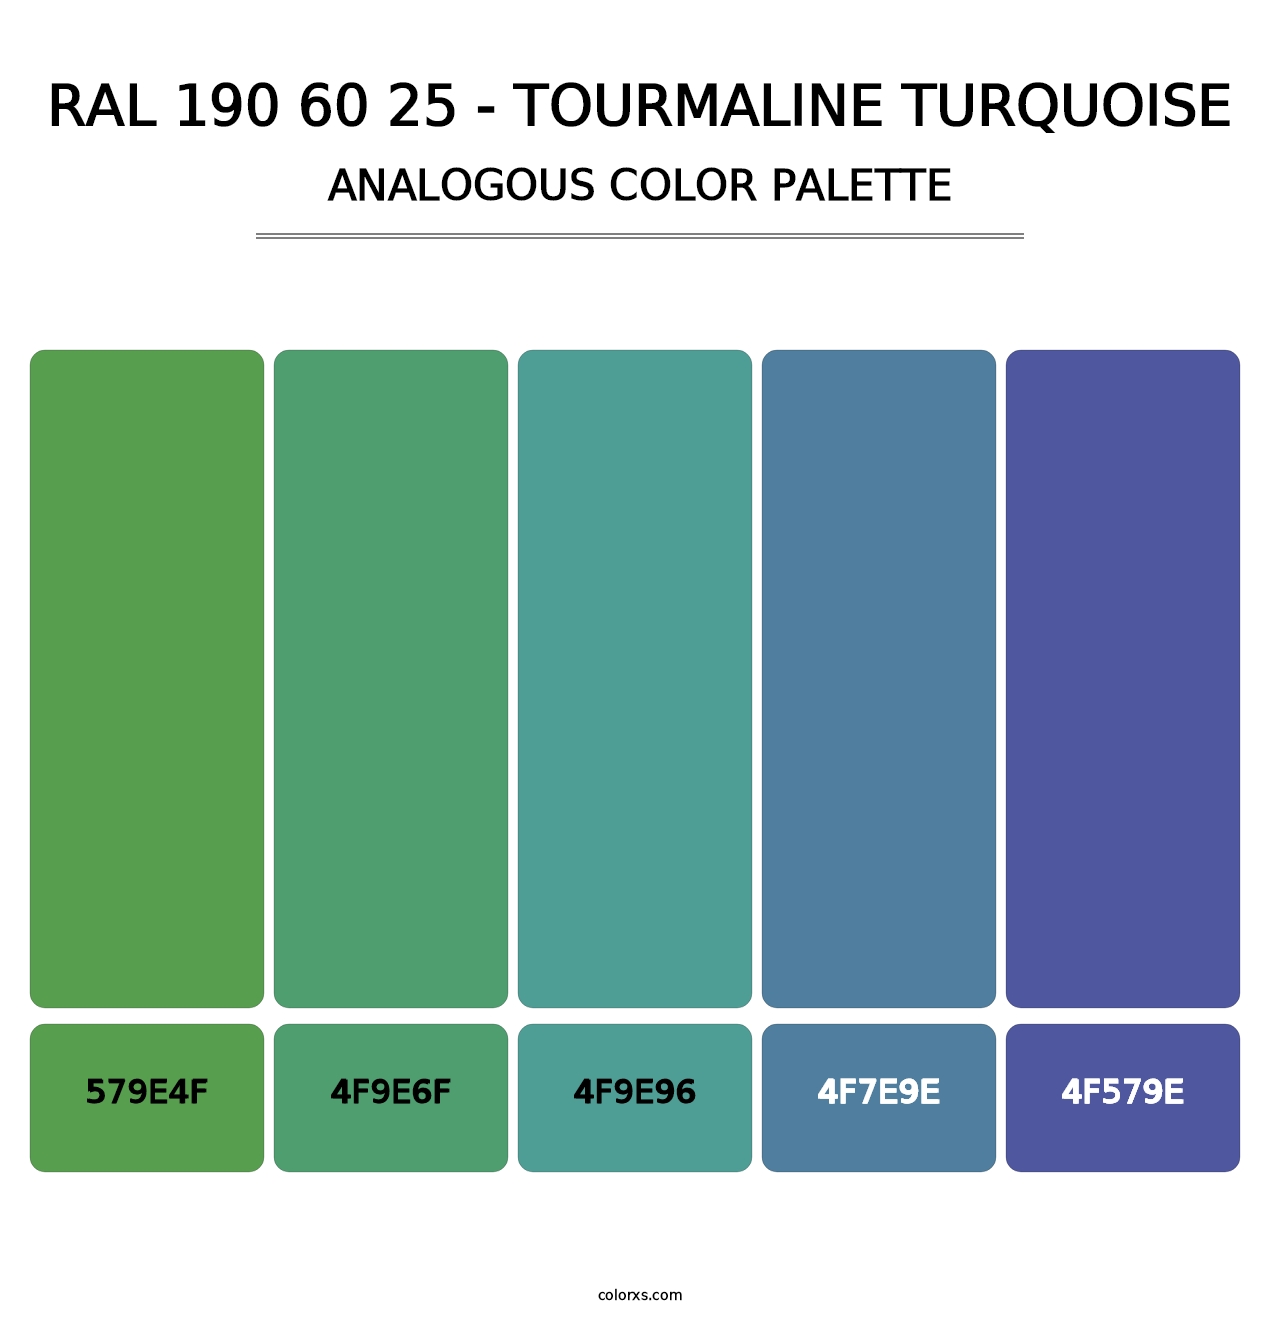 RAL 190 60 25 - Tourmaline Turquoise - Analogous Color Palette